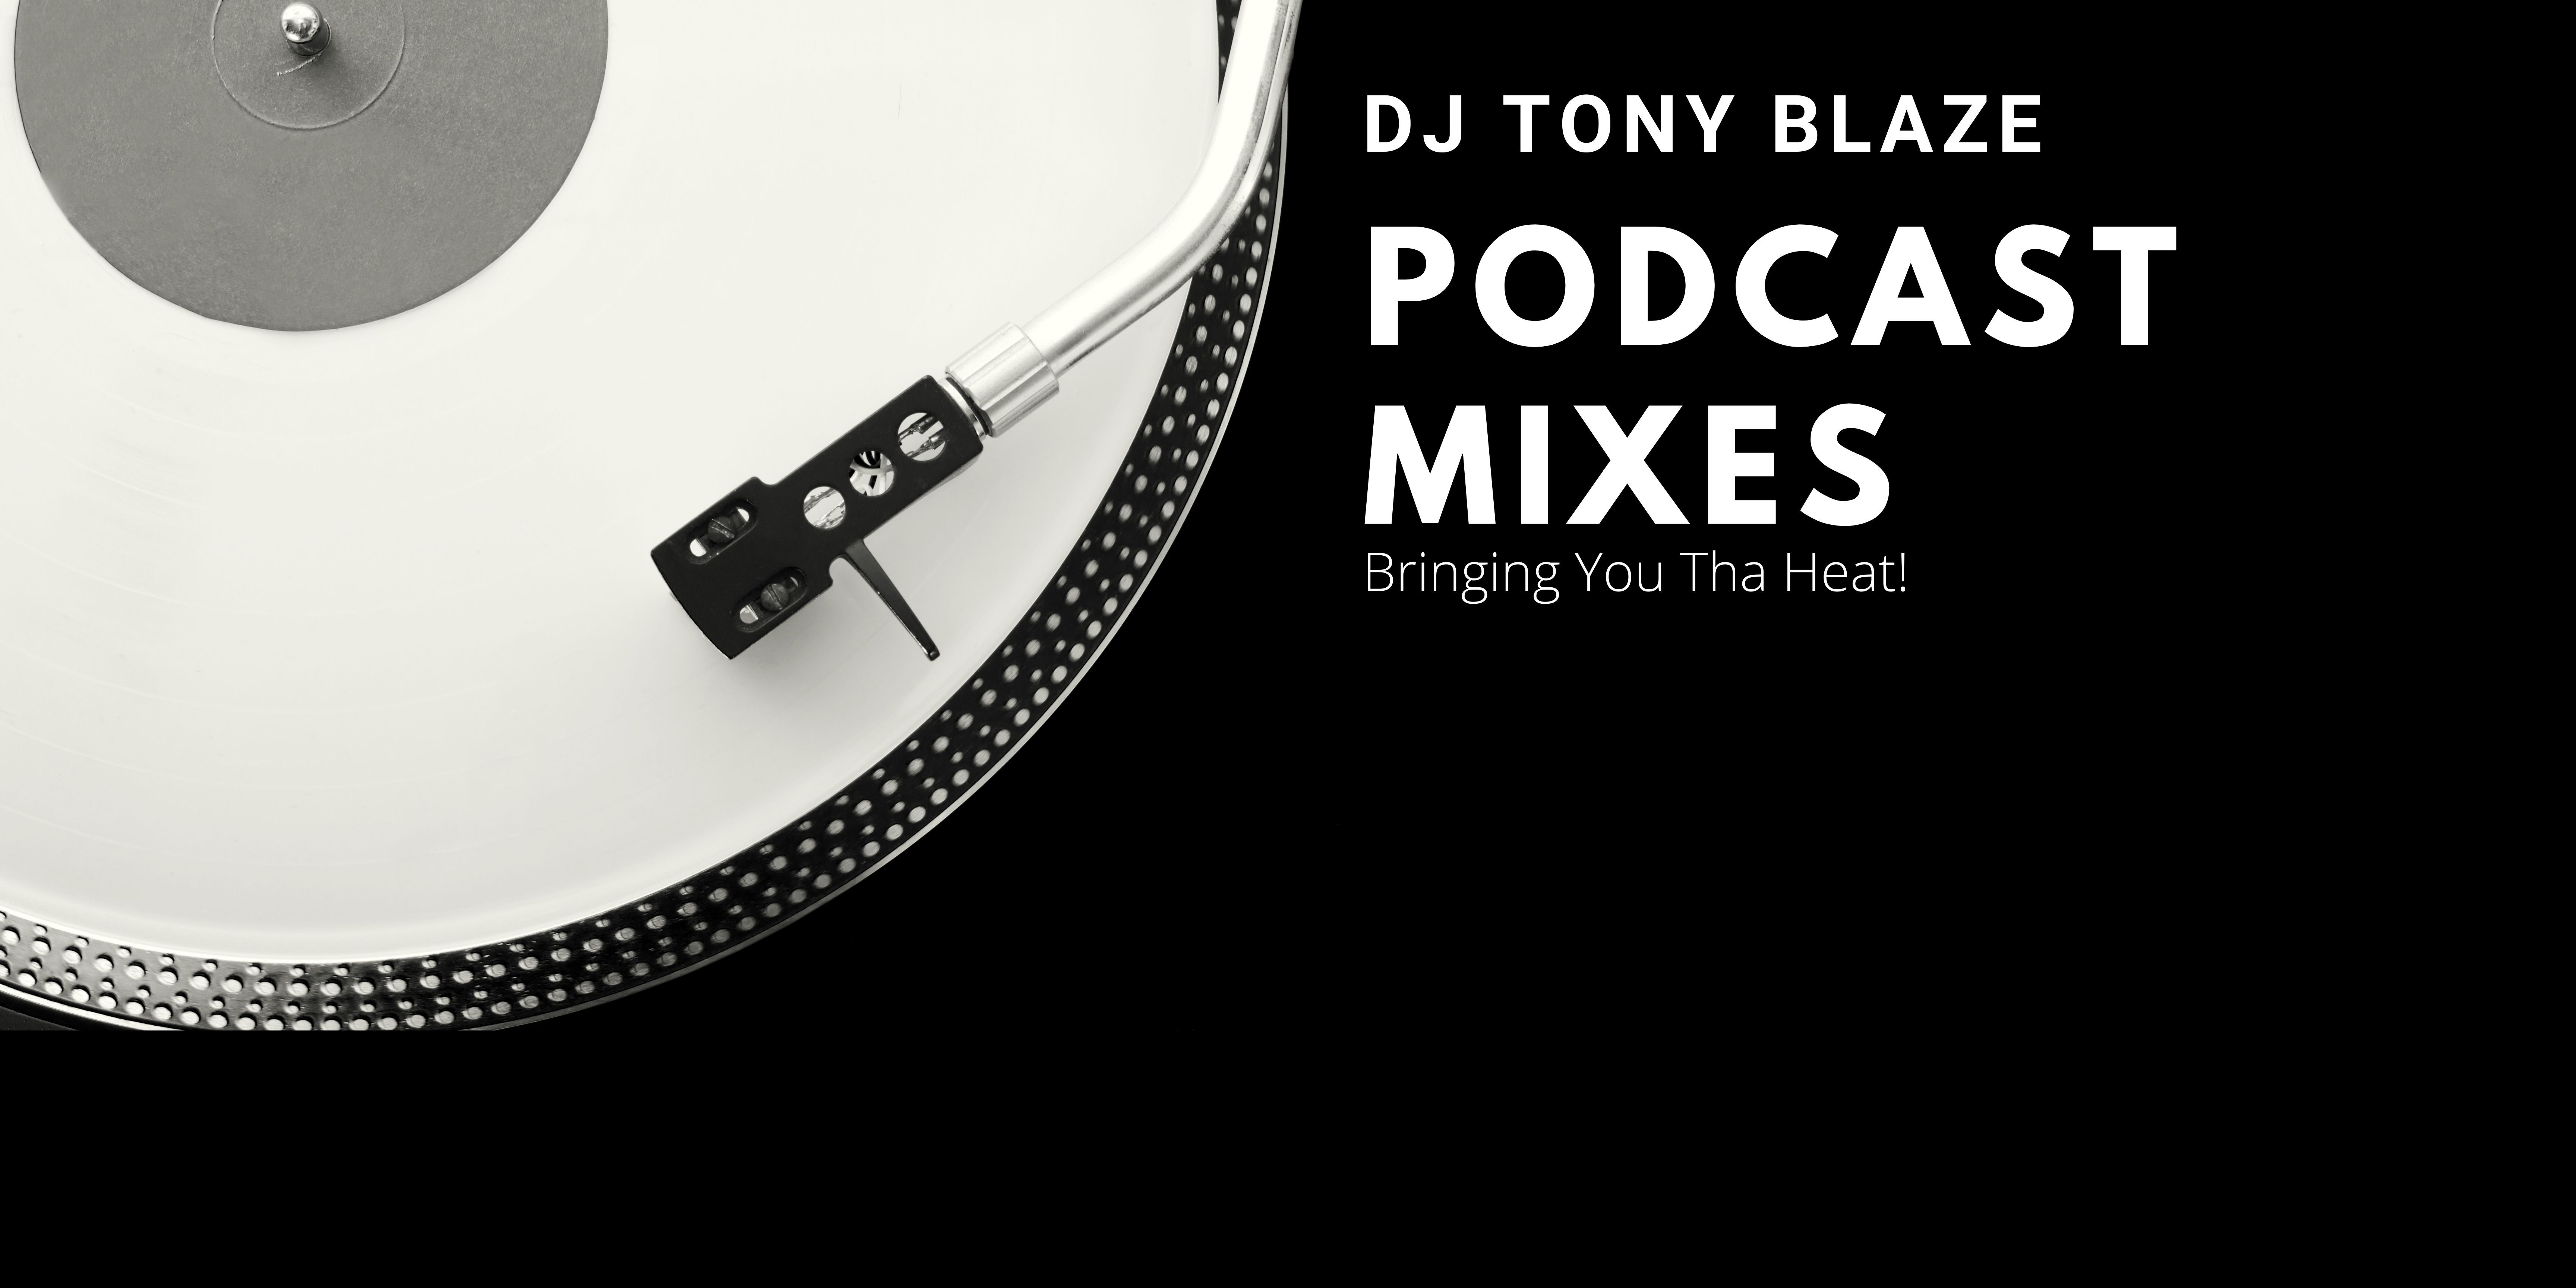 Dj Tony Blaze‘s Podcast